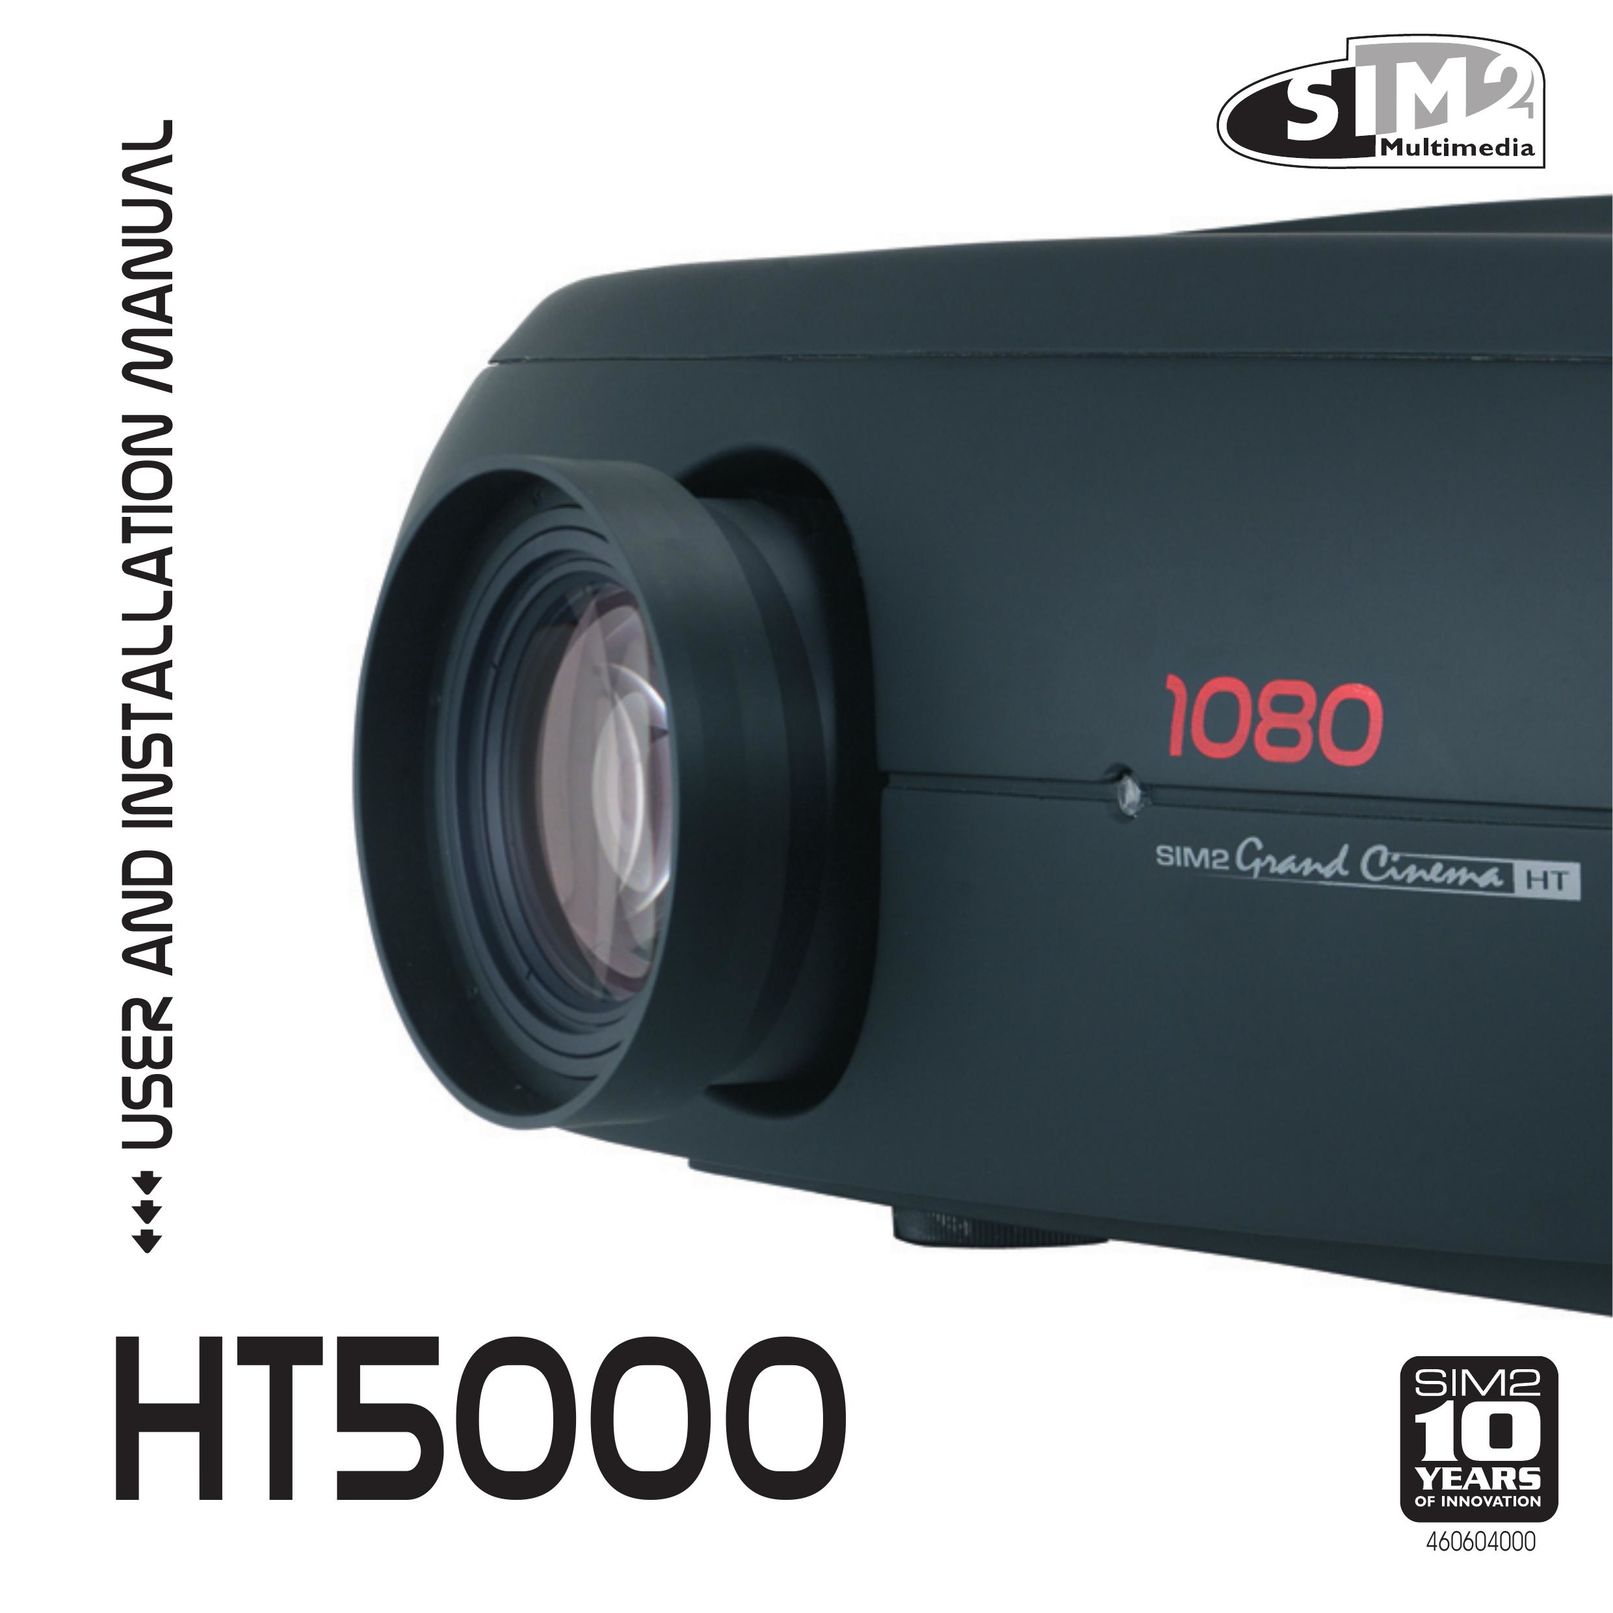 Sim2 Multimedia HT5000 Projector User Manual